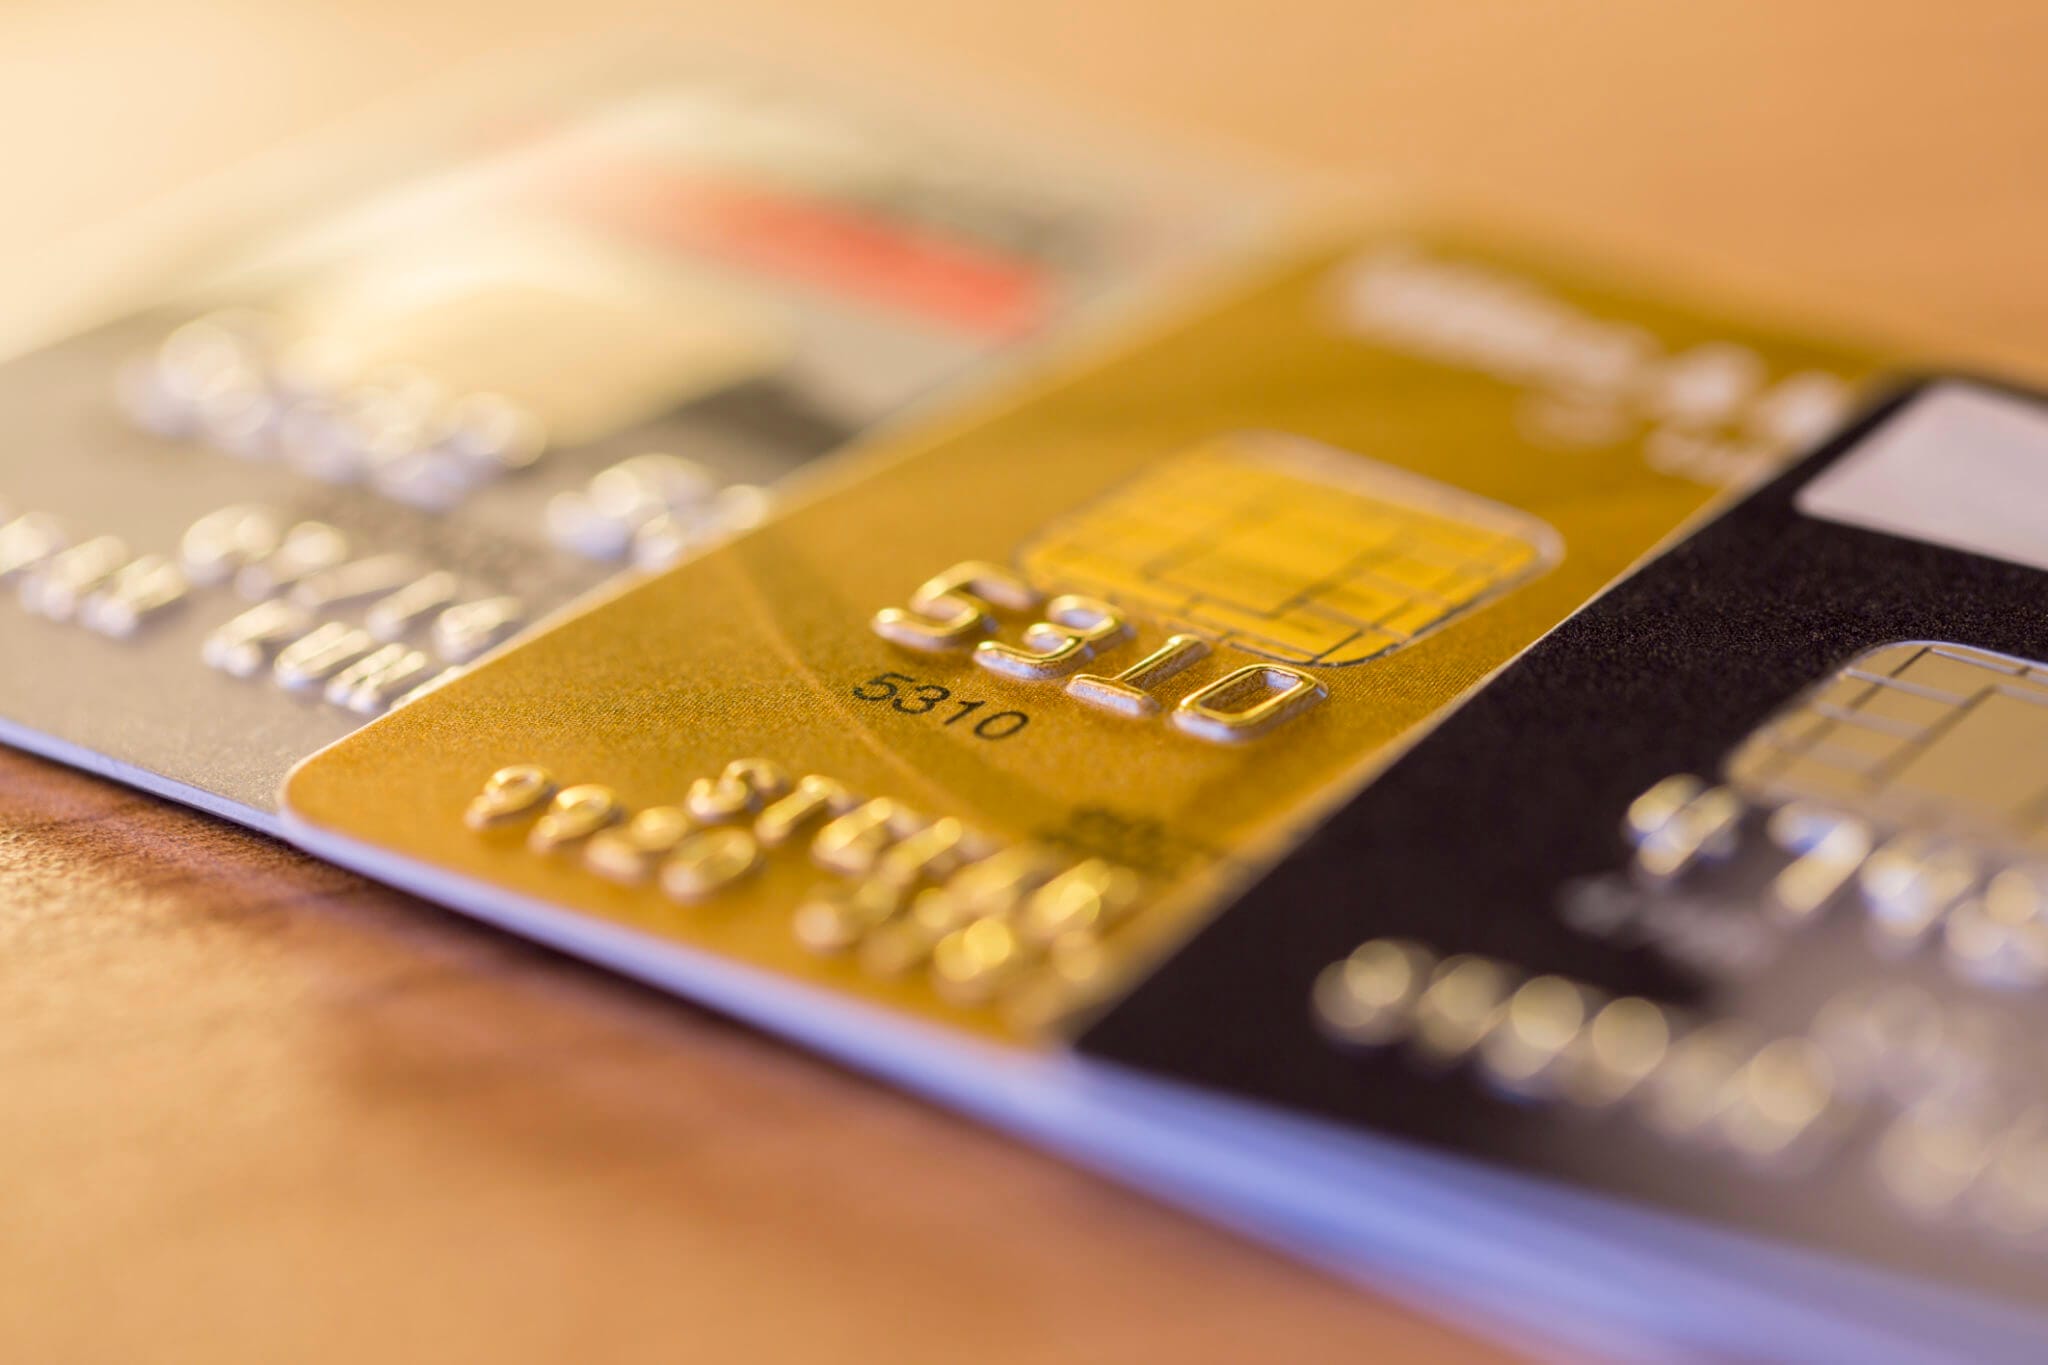 ach debit or credit carddebit card